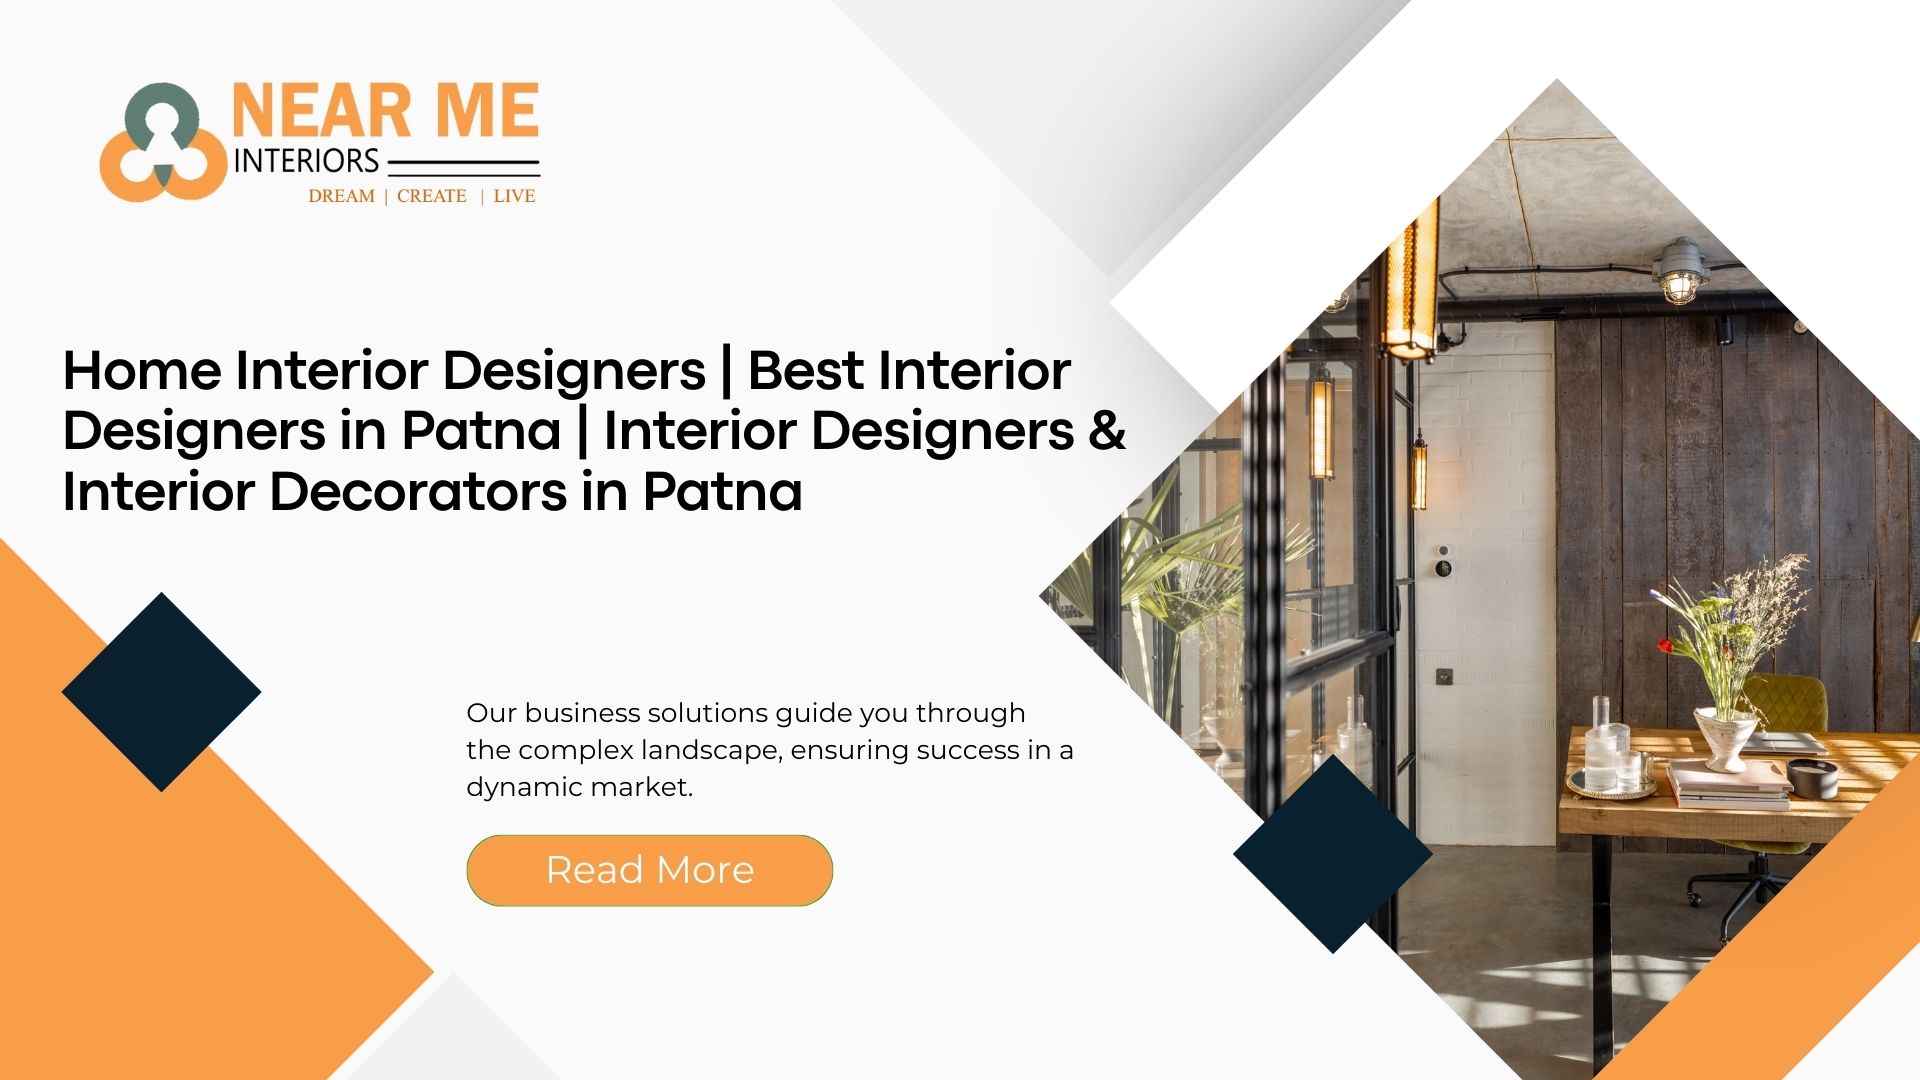 Home Interior Designers | Best Interior Designers in Patna | Interior Designers & Interior Decorators in Patna